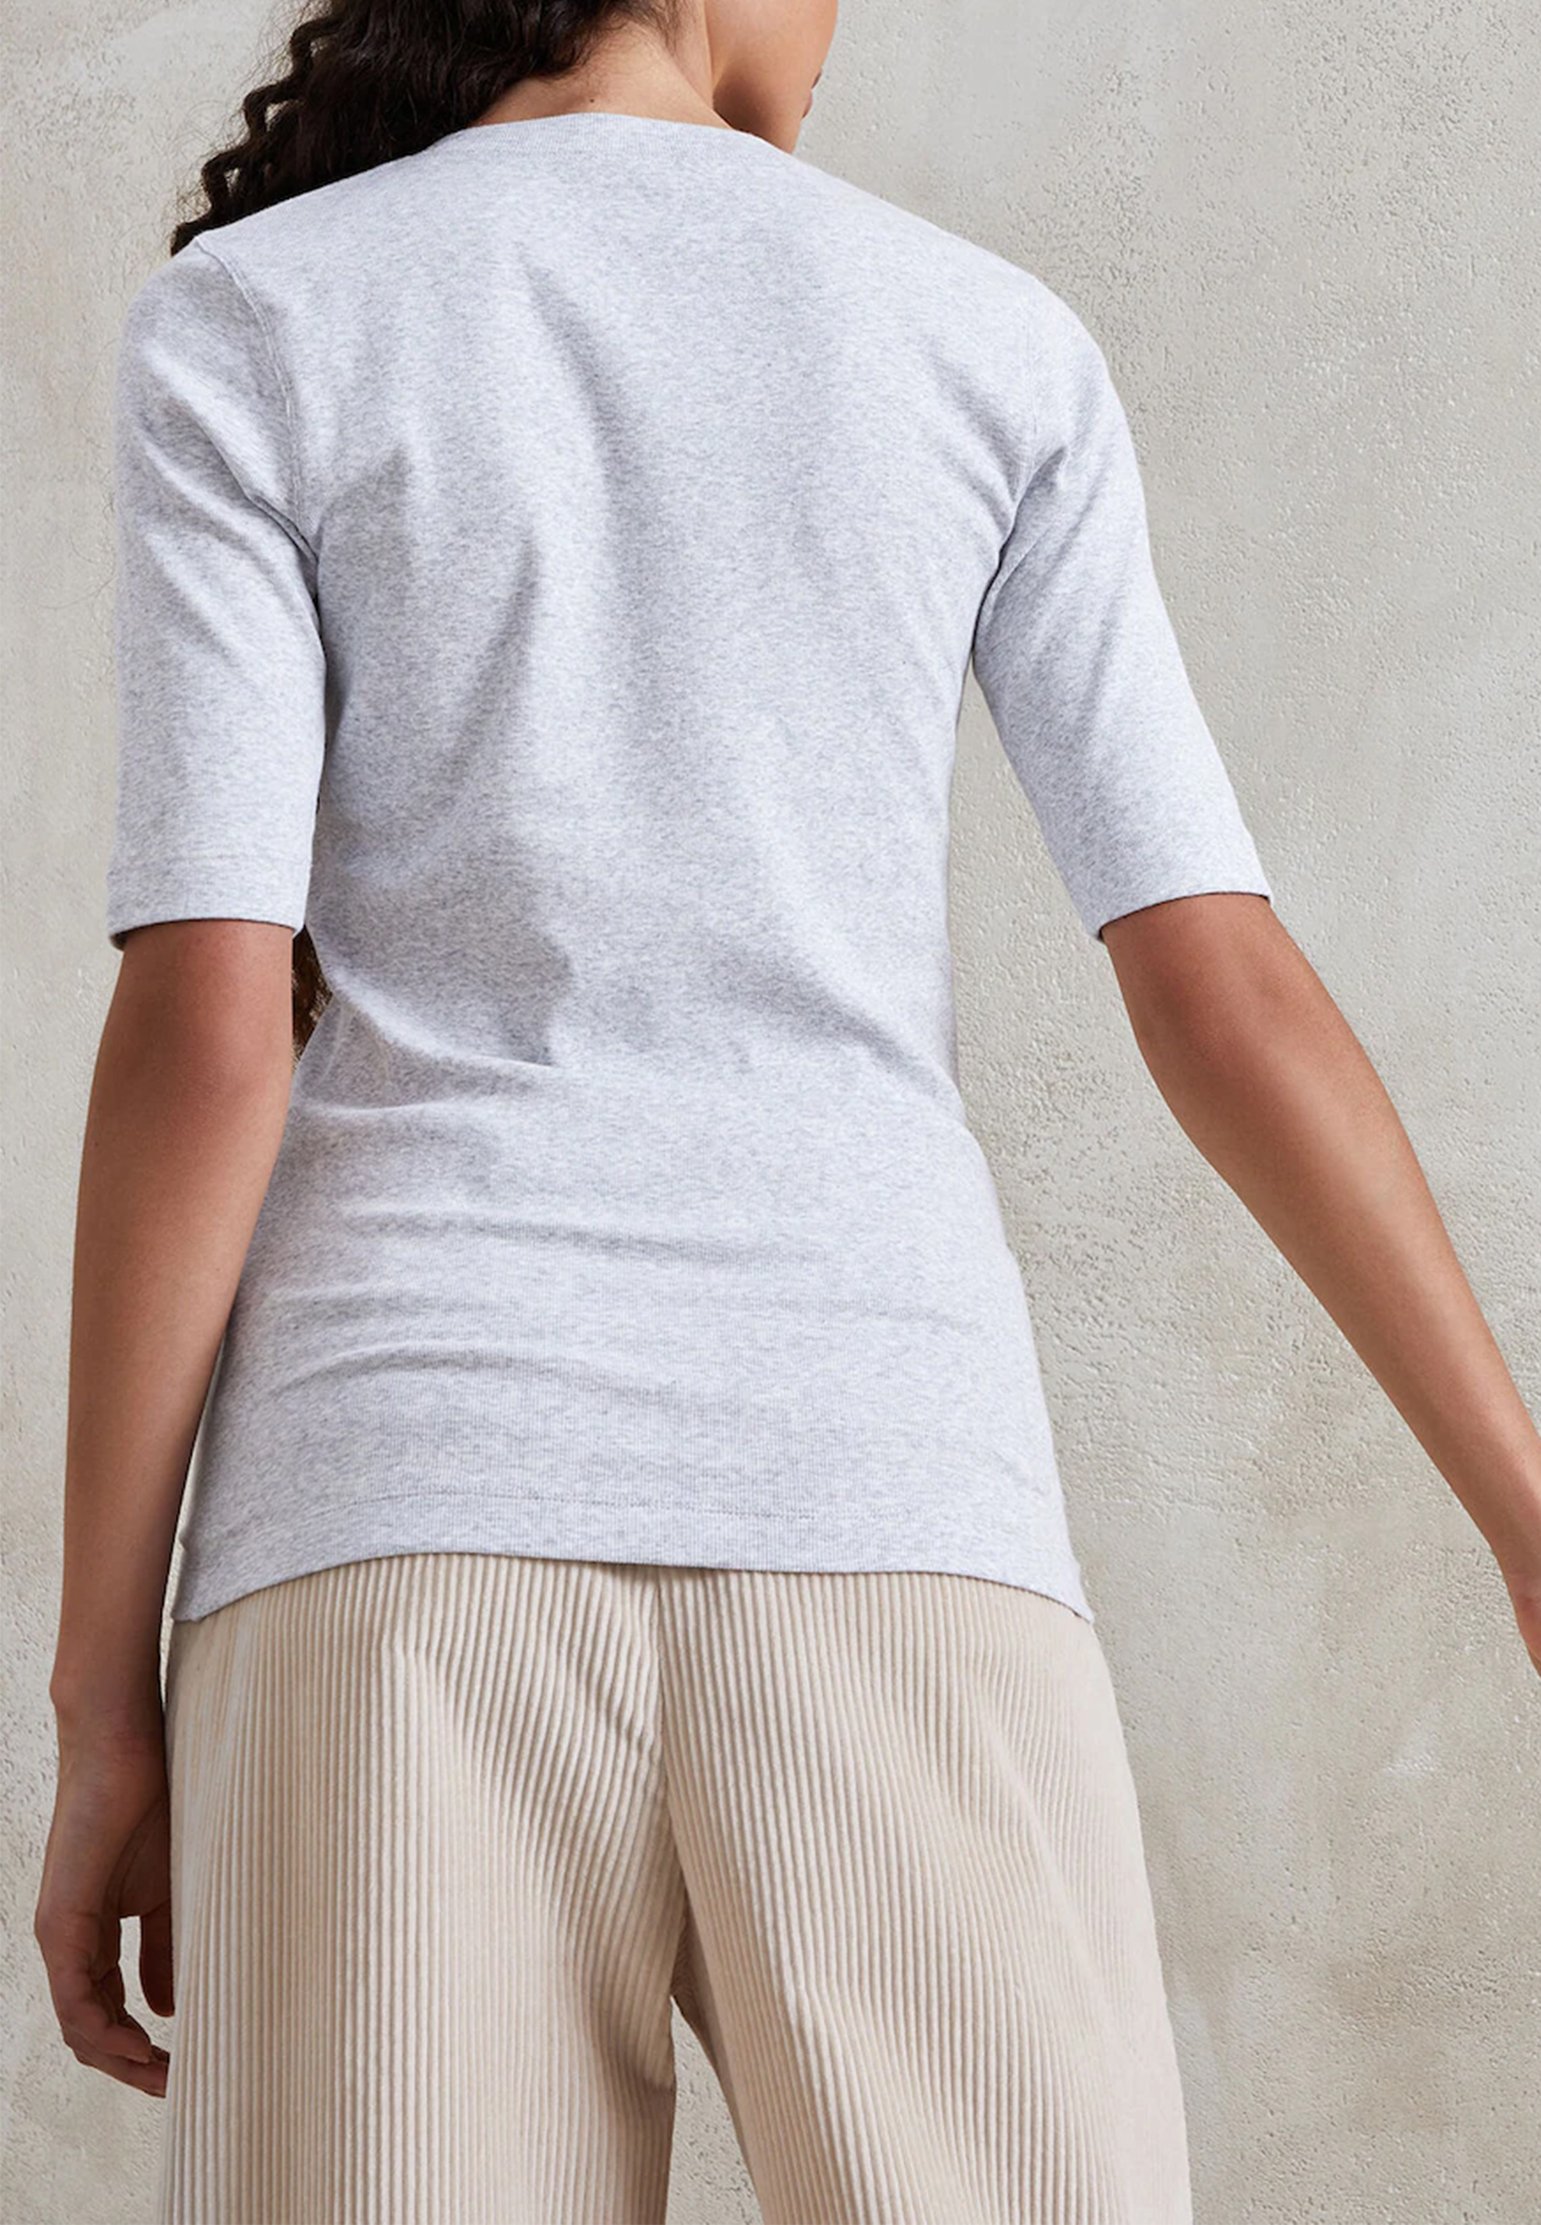 T-Shirt BRUNELLO CUCINELLI Color: grey (Code: 638) in online store Allure